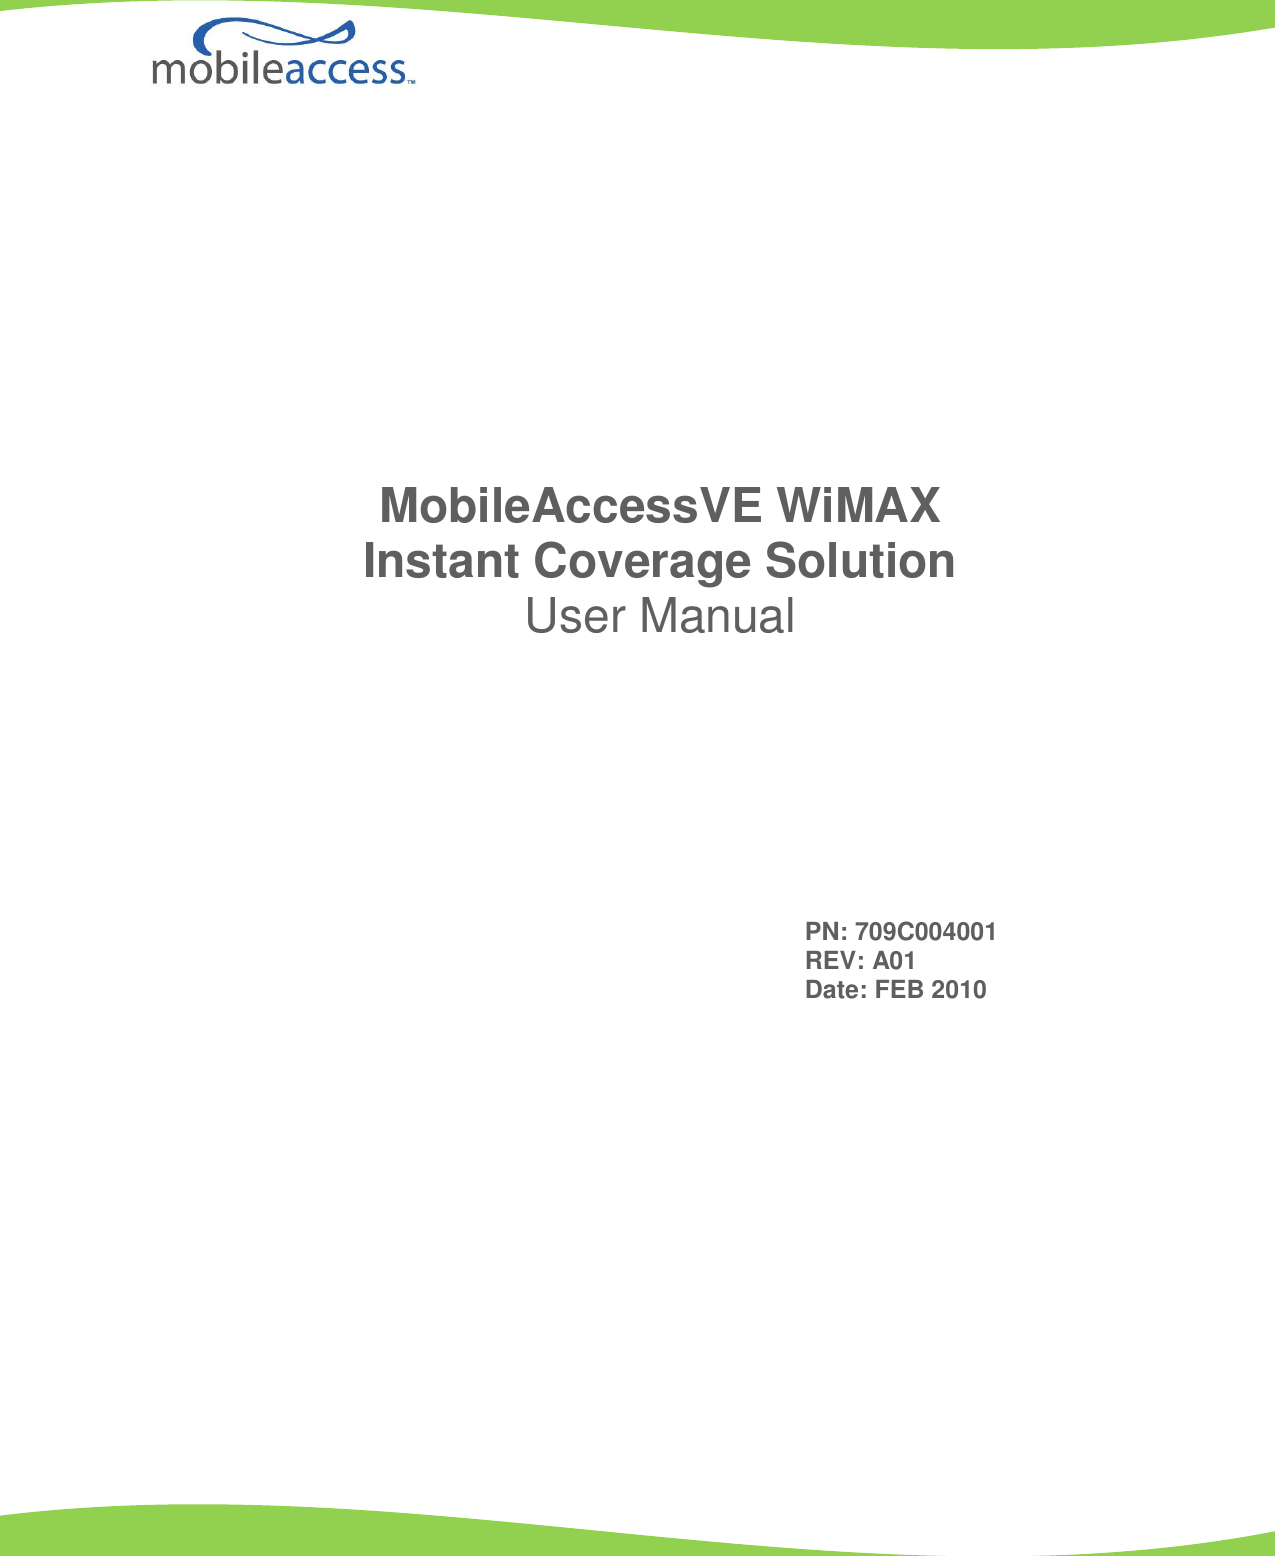                                             MobileAccessVE WiMAX Instant Coverage Solution User Manual PN: 709C004001 REV: A01 Date: FEB 2010 